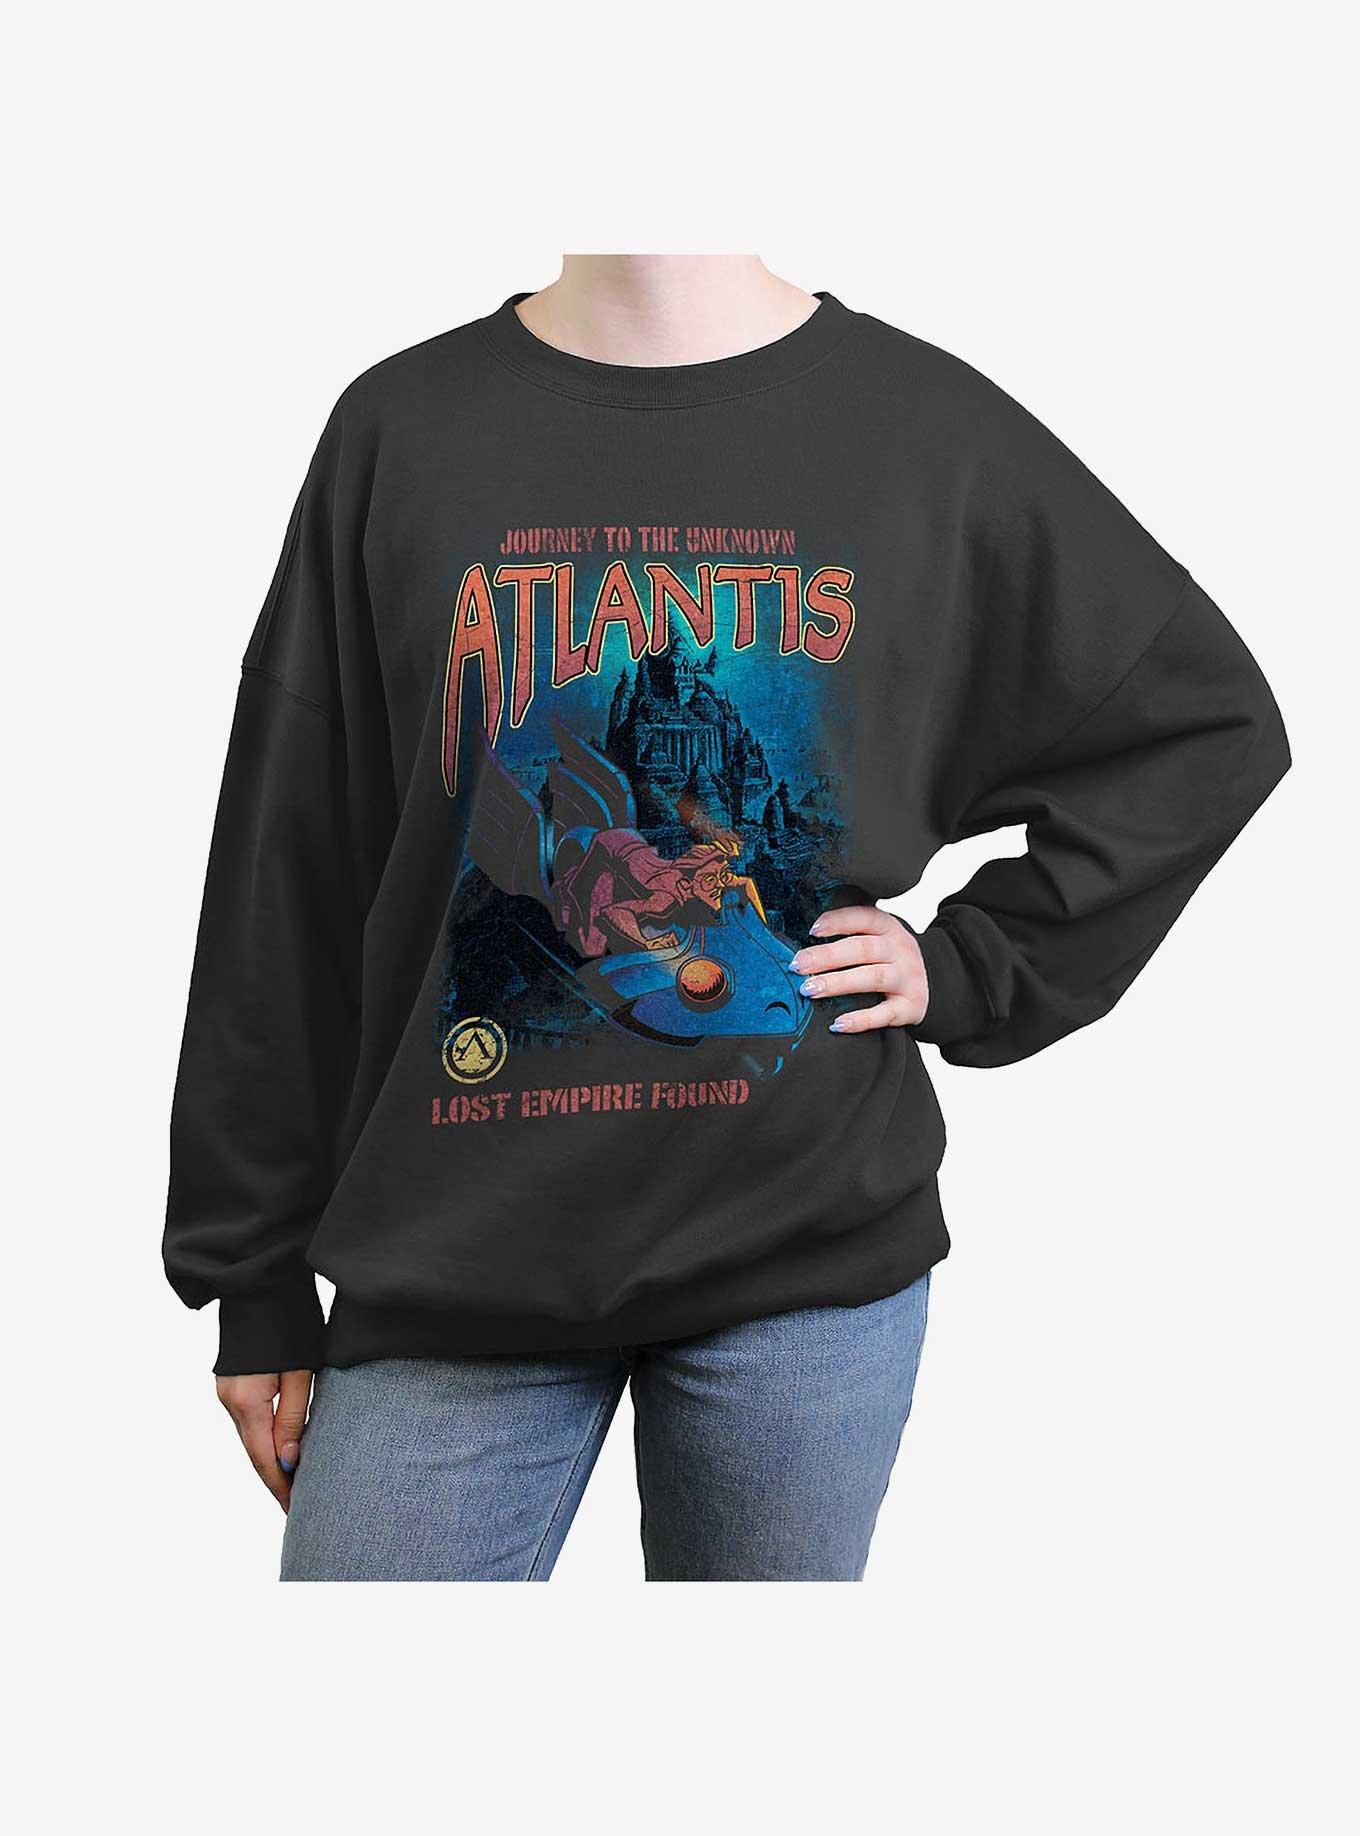 Disney Atlantis: The Lost Empire Atlantis Found Girls Oversized Sweatshirt, CHARCOAL, hi-res